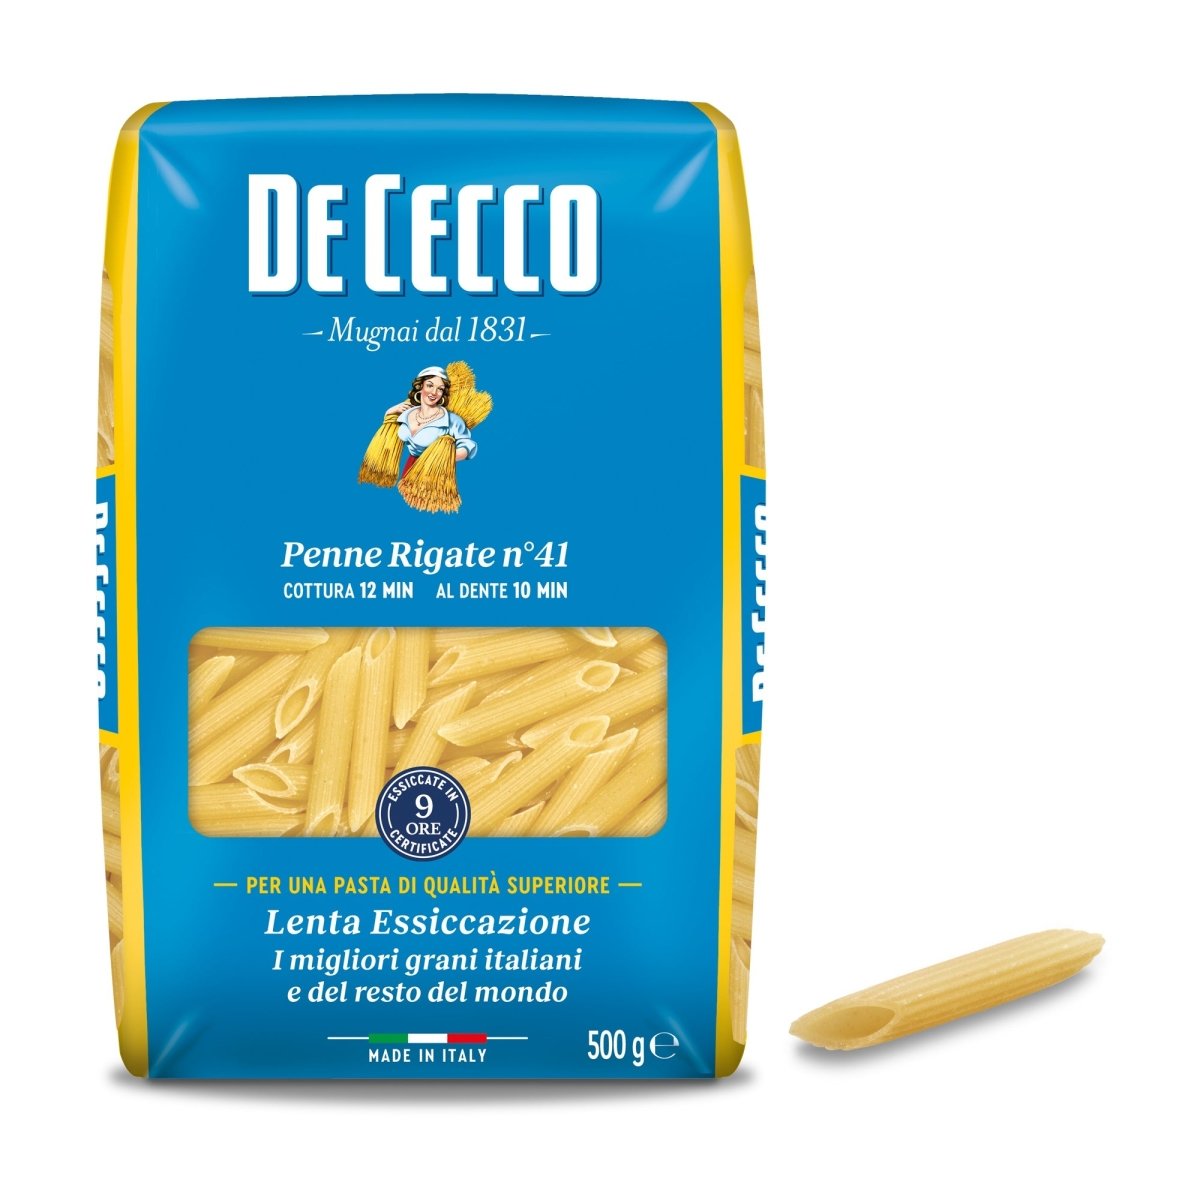 De Cecco Penne Rigate Pasta n° 41 500g - Tulsidas